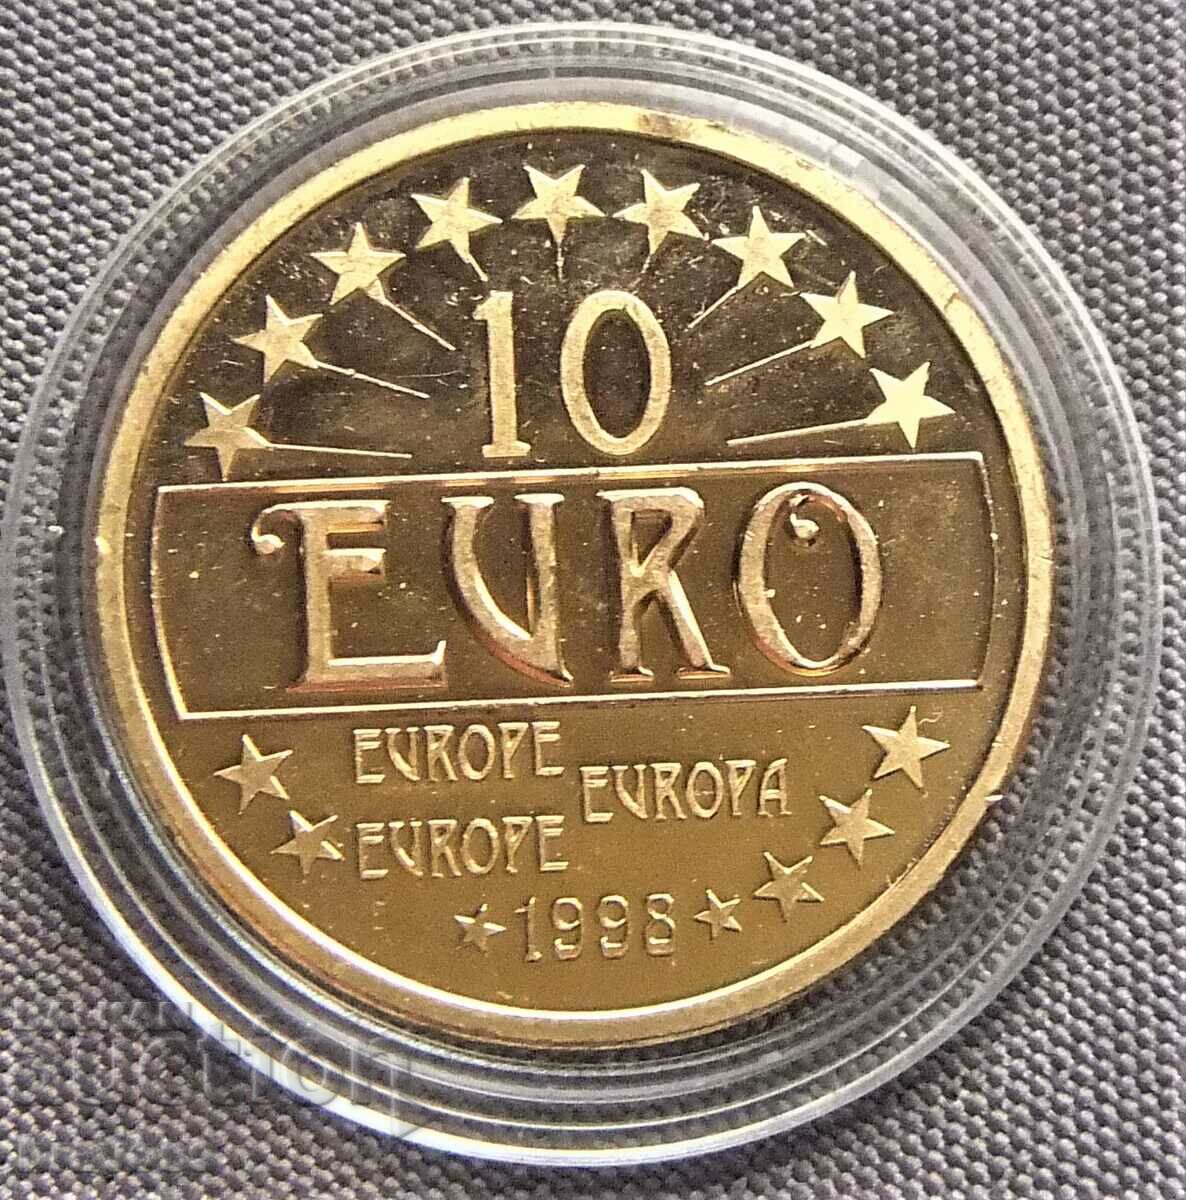 10 евро - 1998